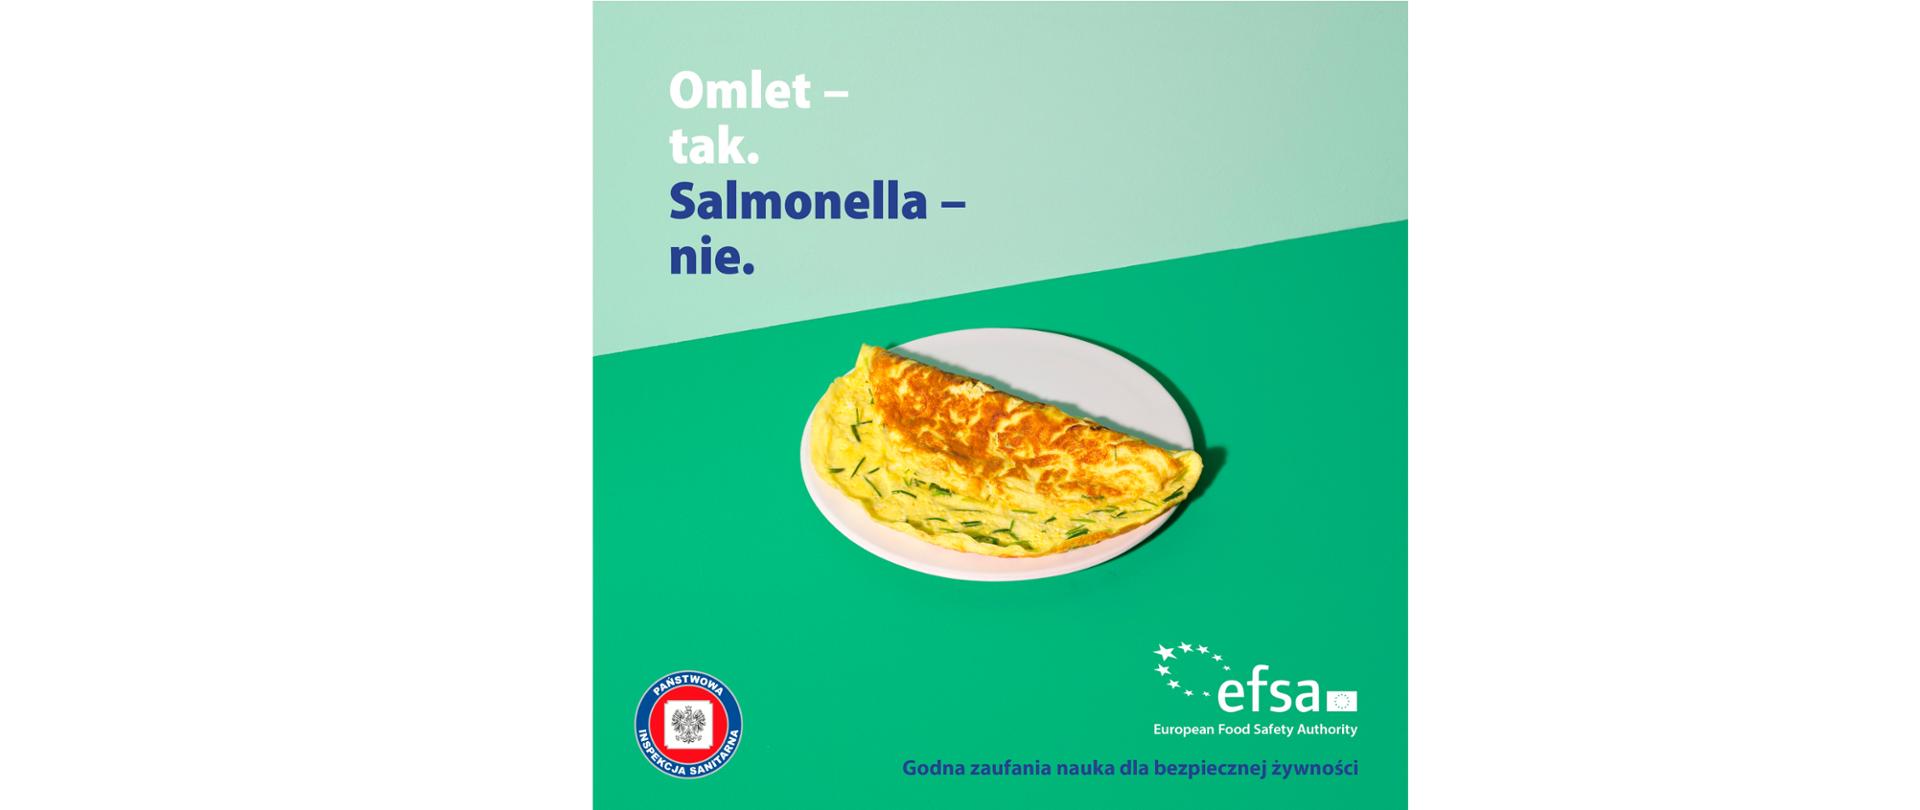 Omlet-tak. Salmonella-nie.